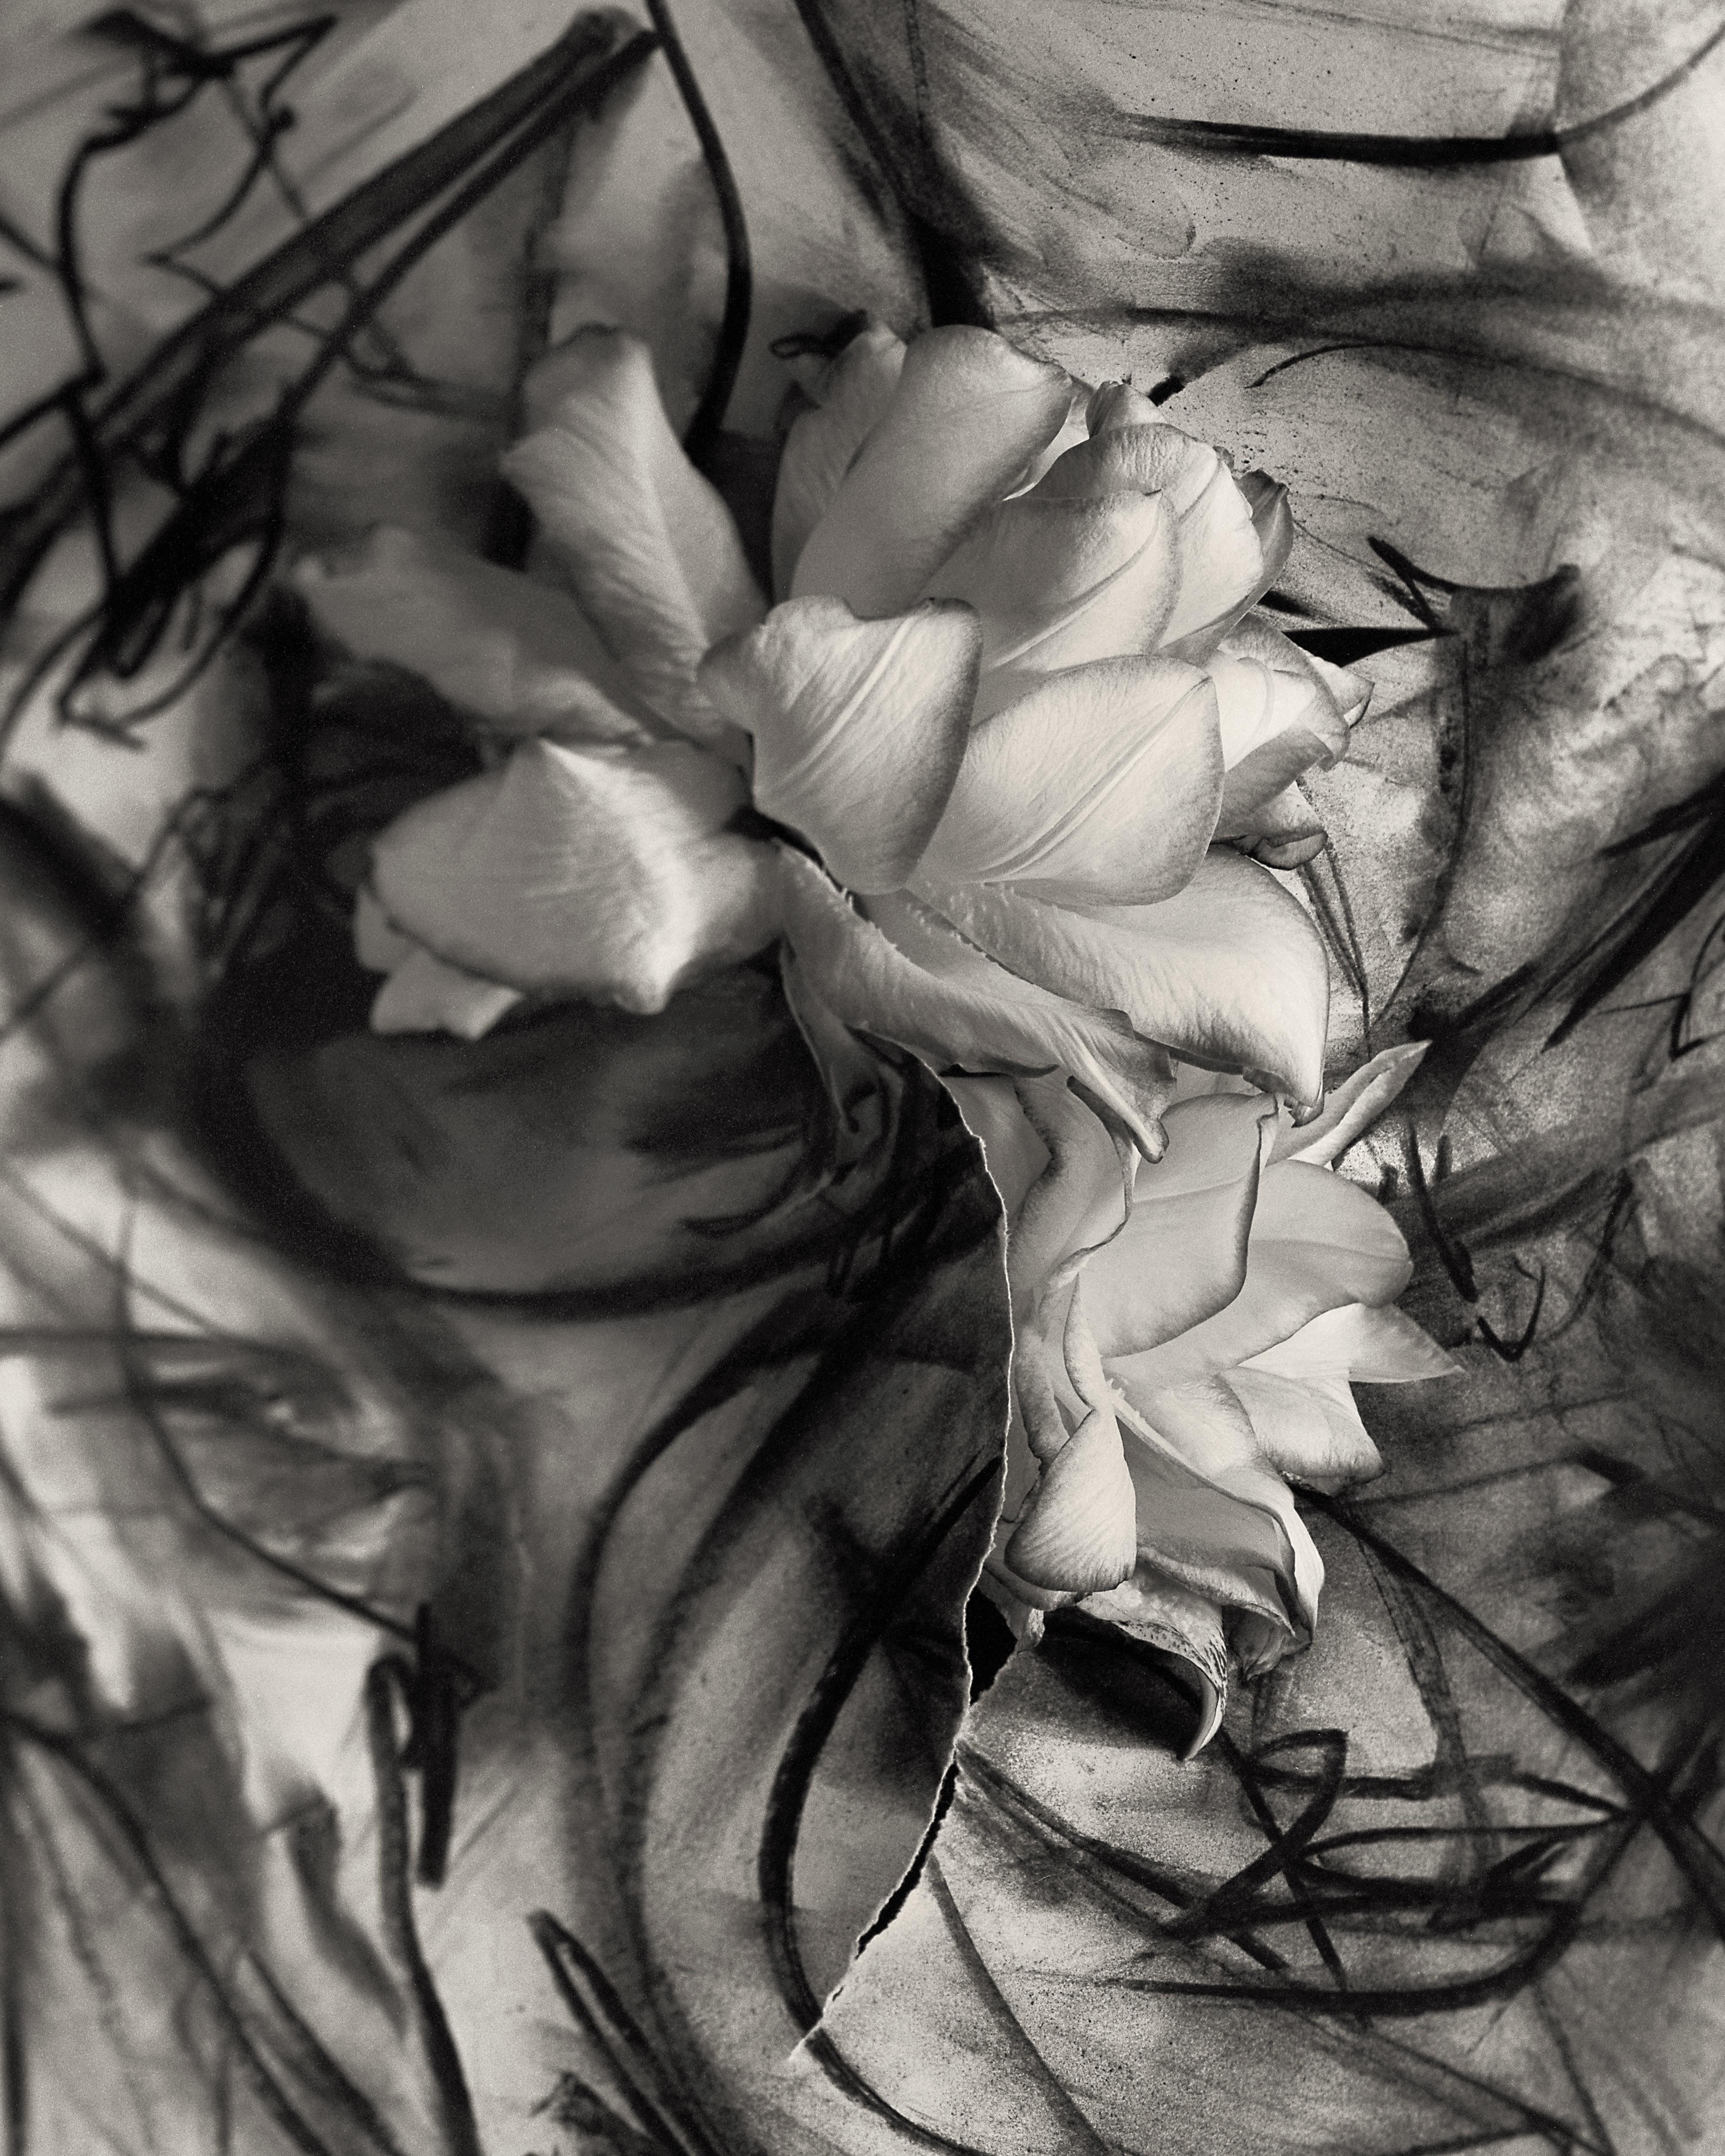 Photographie d'expressionnisme abstrait Lily in Charcoal n°3, édition de 10